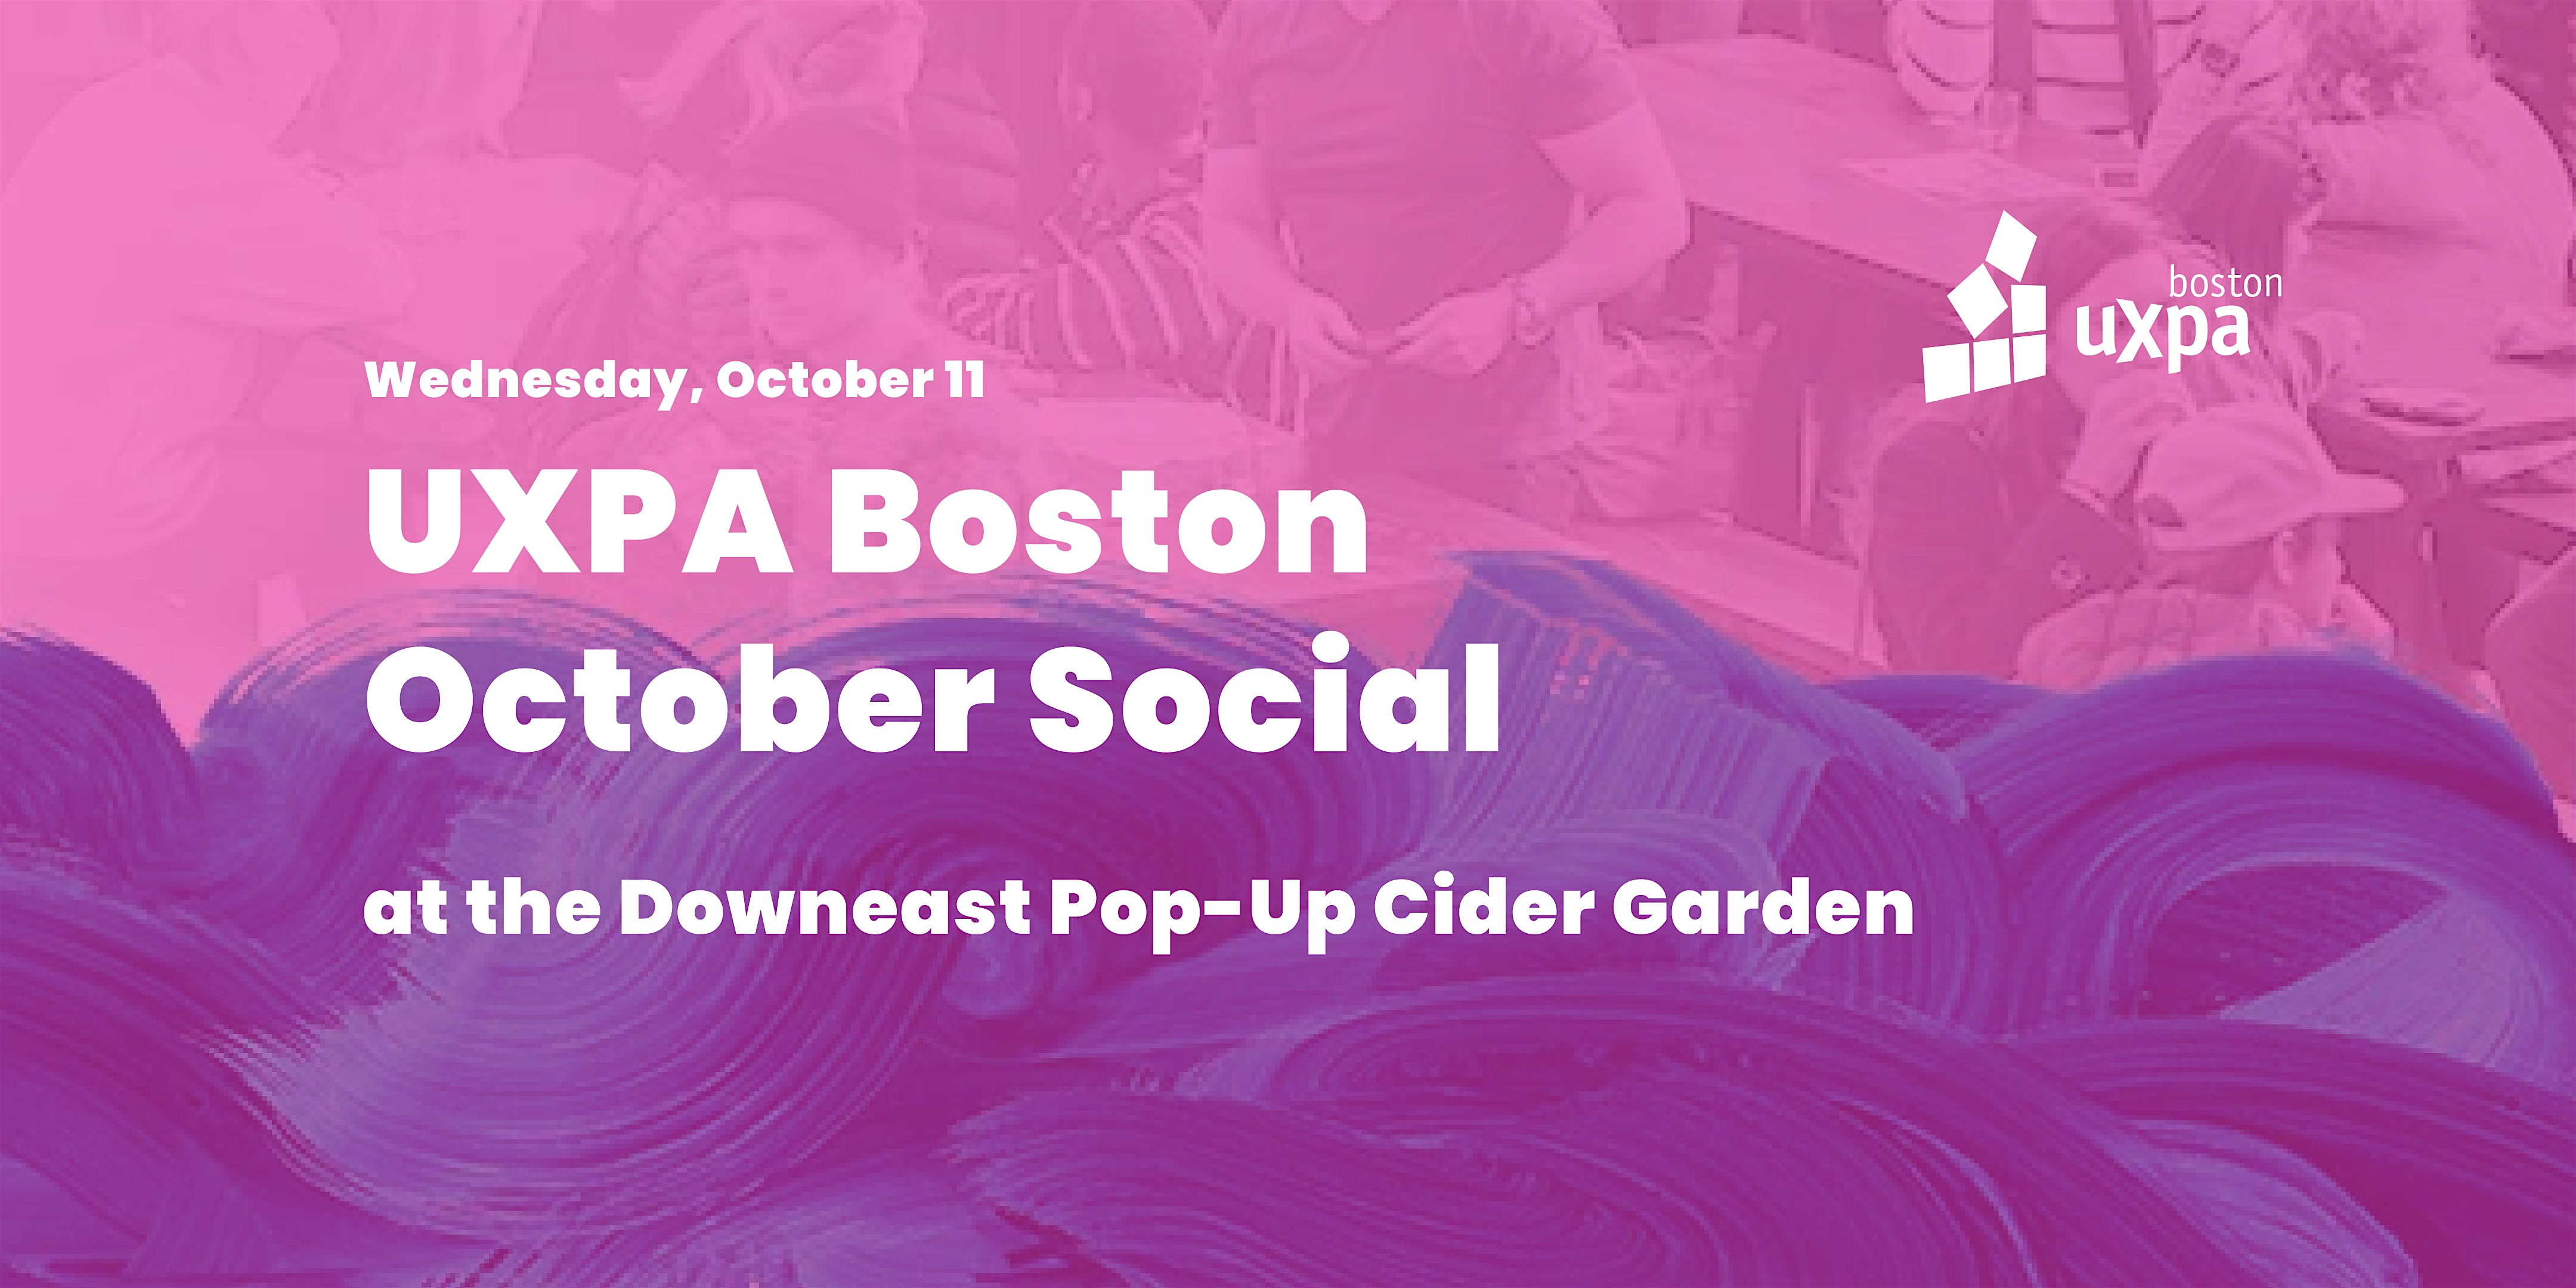 UXPA Boston October Social